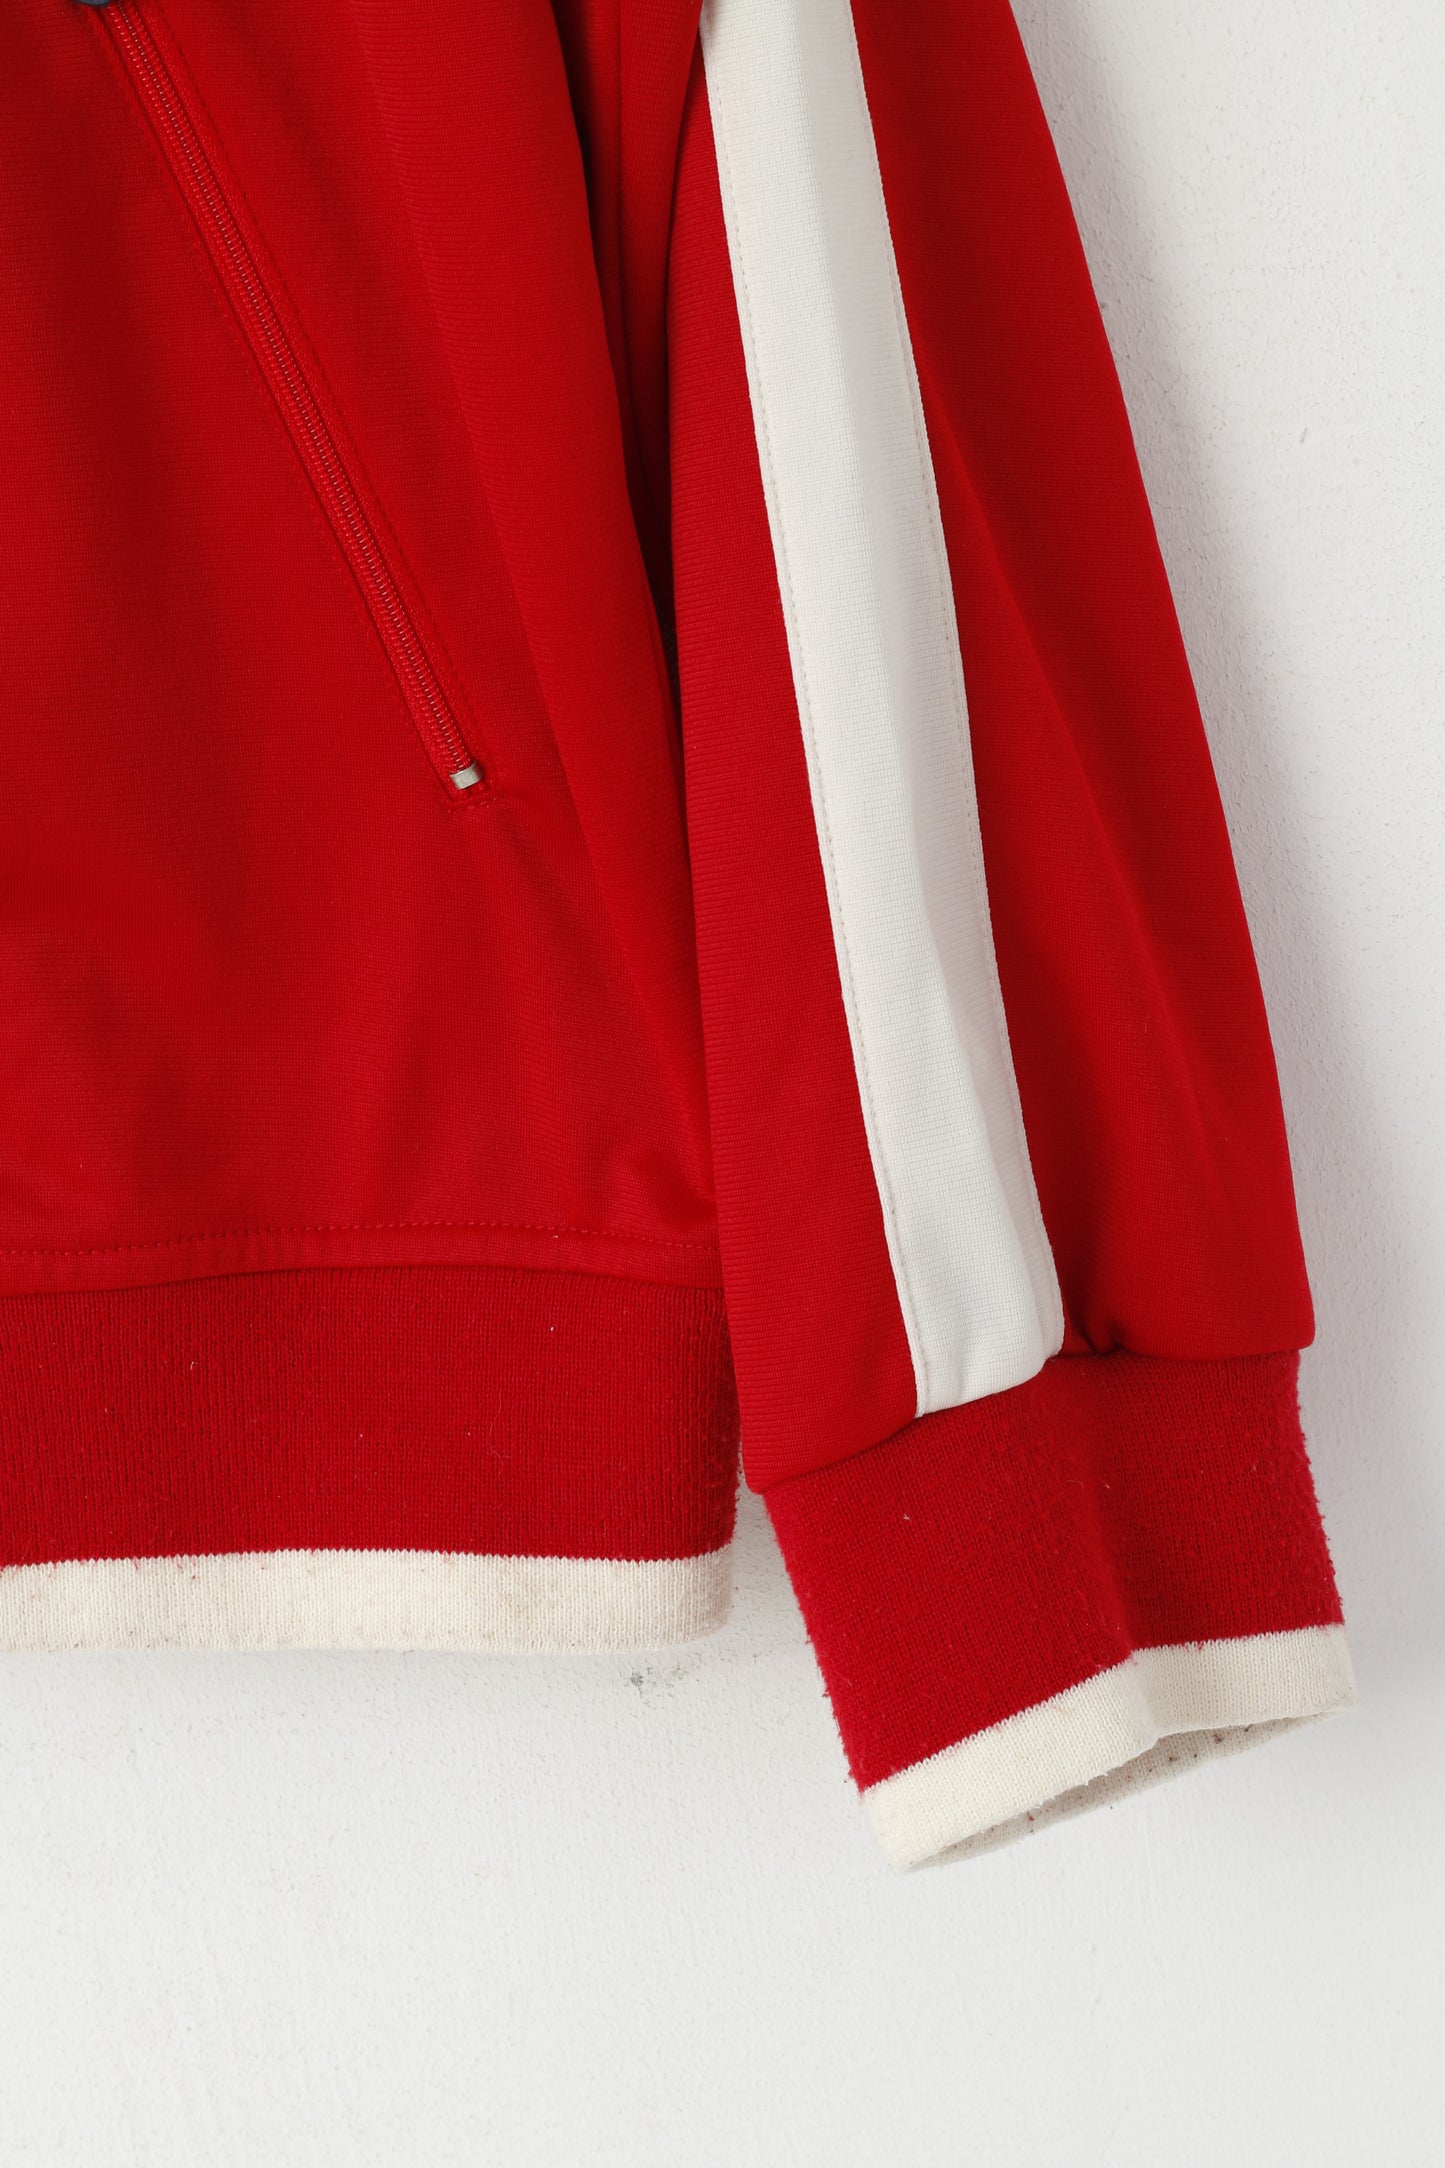 Umbro Men XL Sweatshirt Red Vintage England 1924 Shiny Full Zipper Track Top